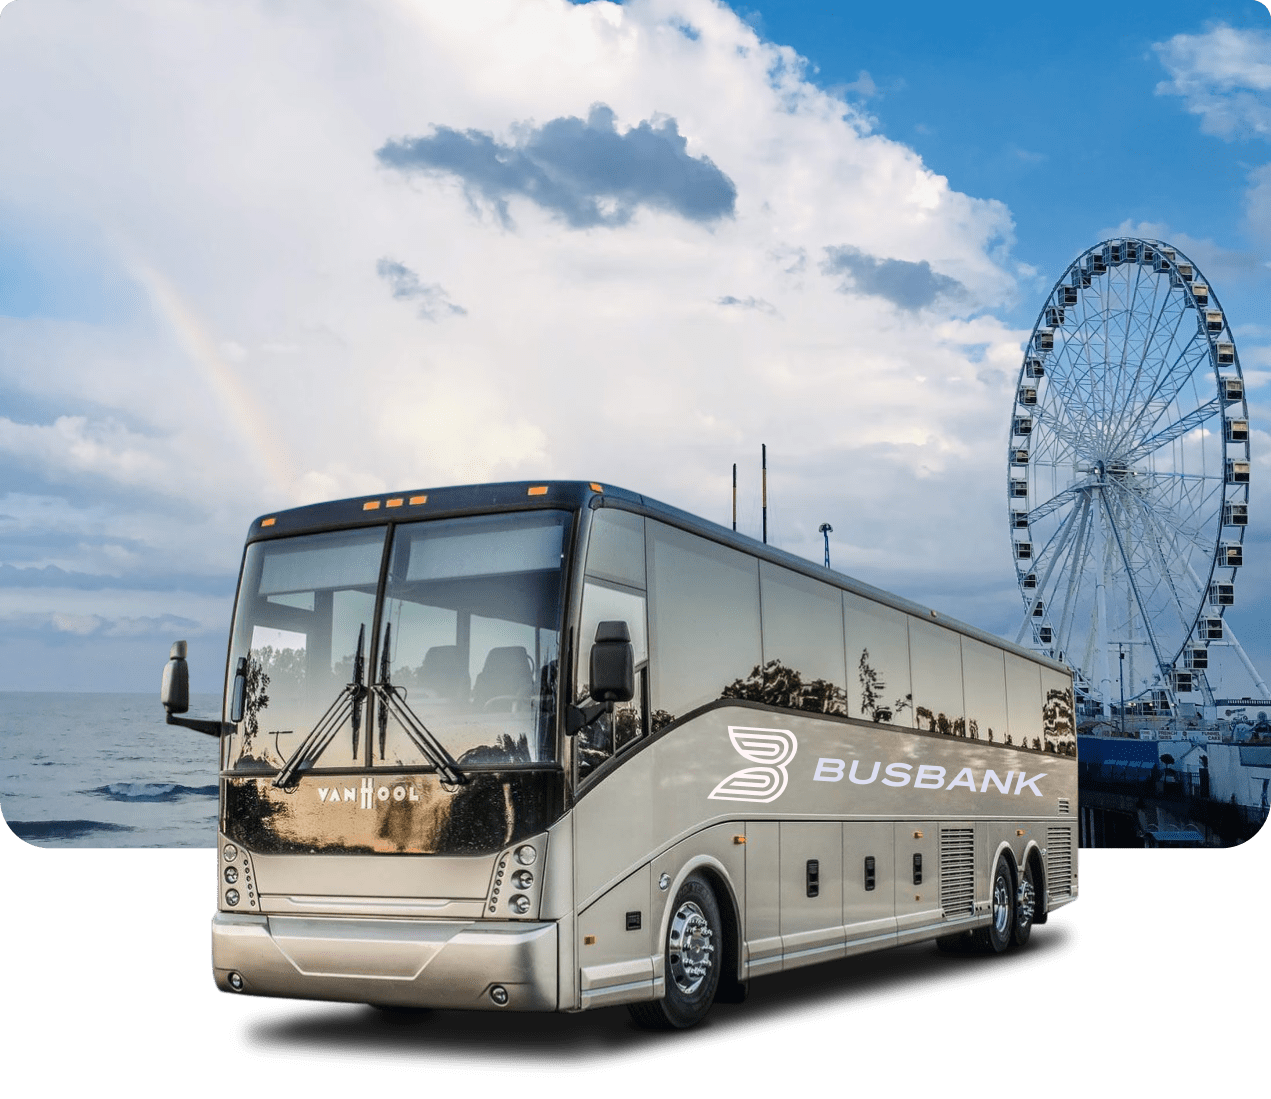 cheap bus trips to atlantic city